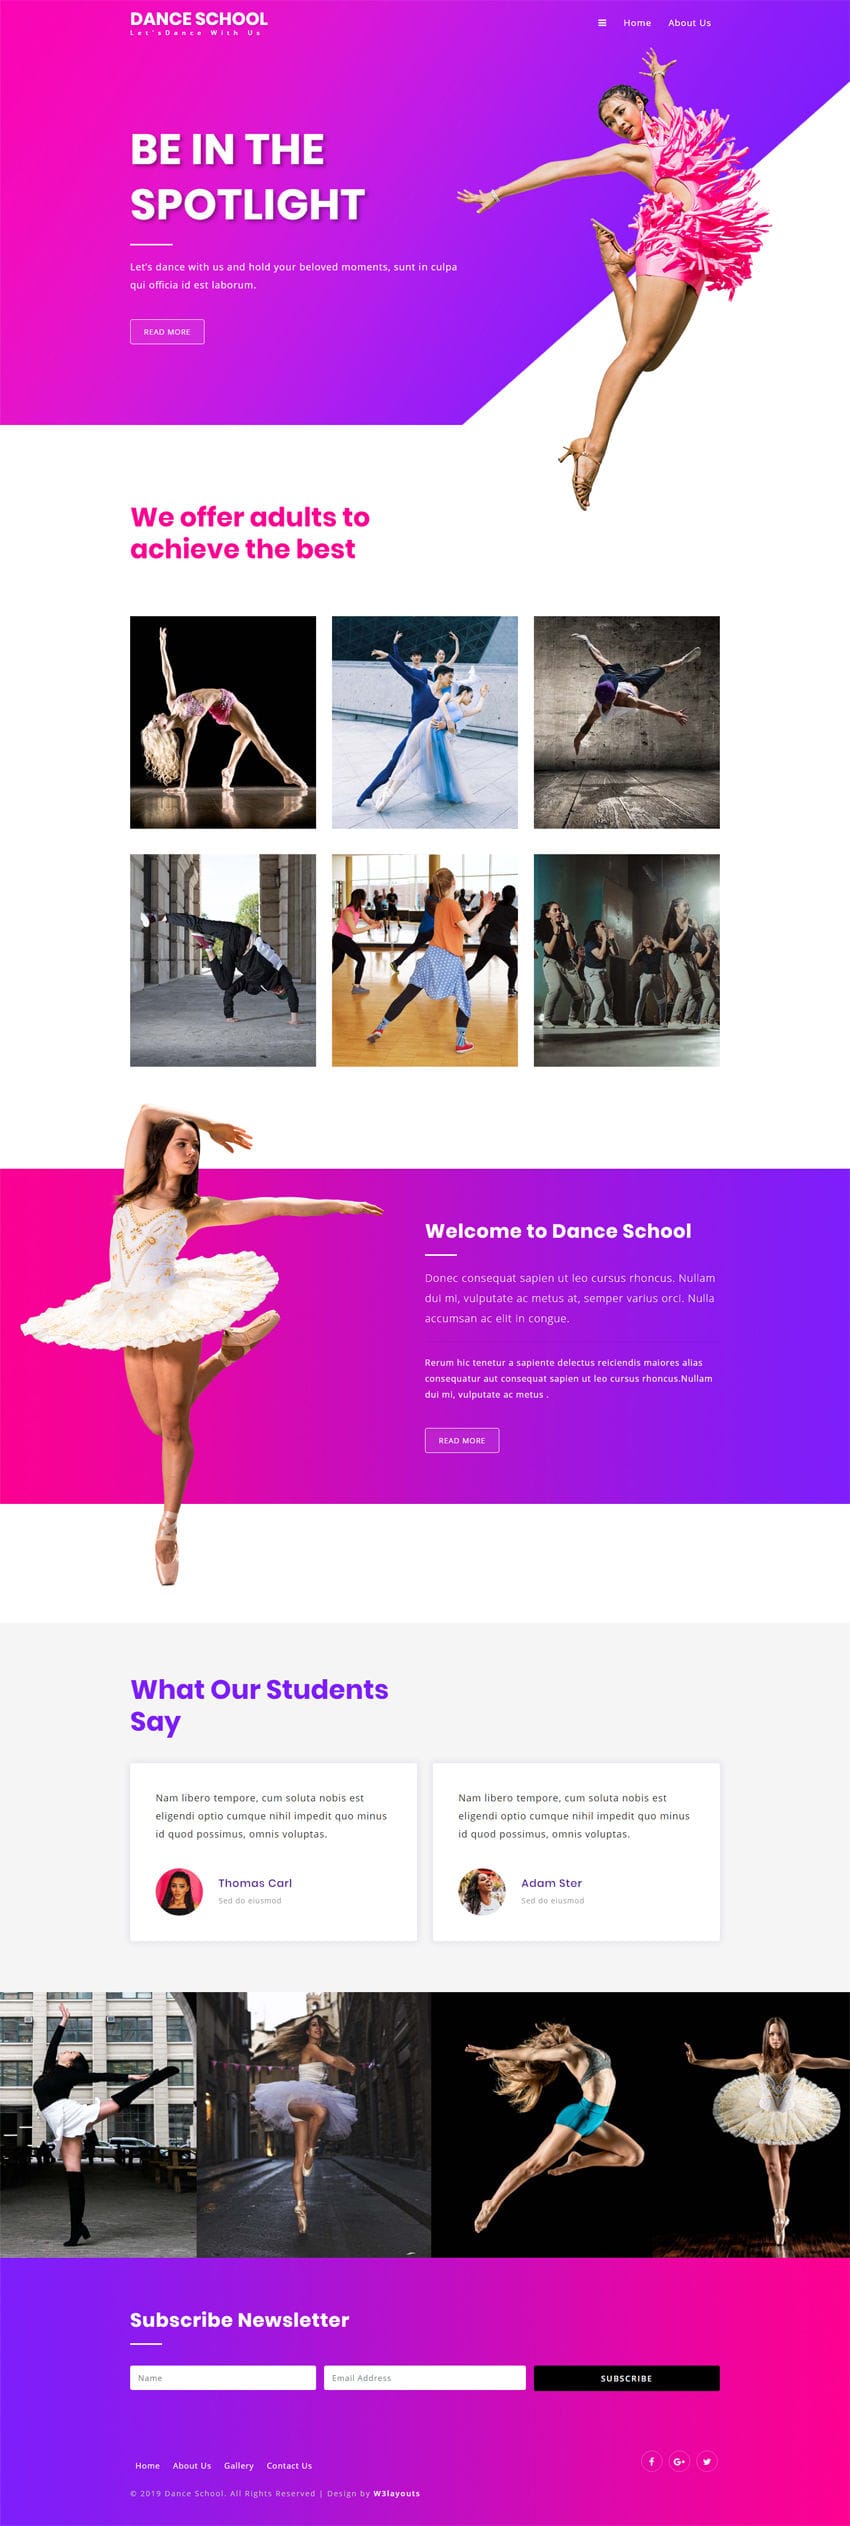 Dance school full screenshot